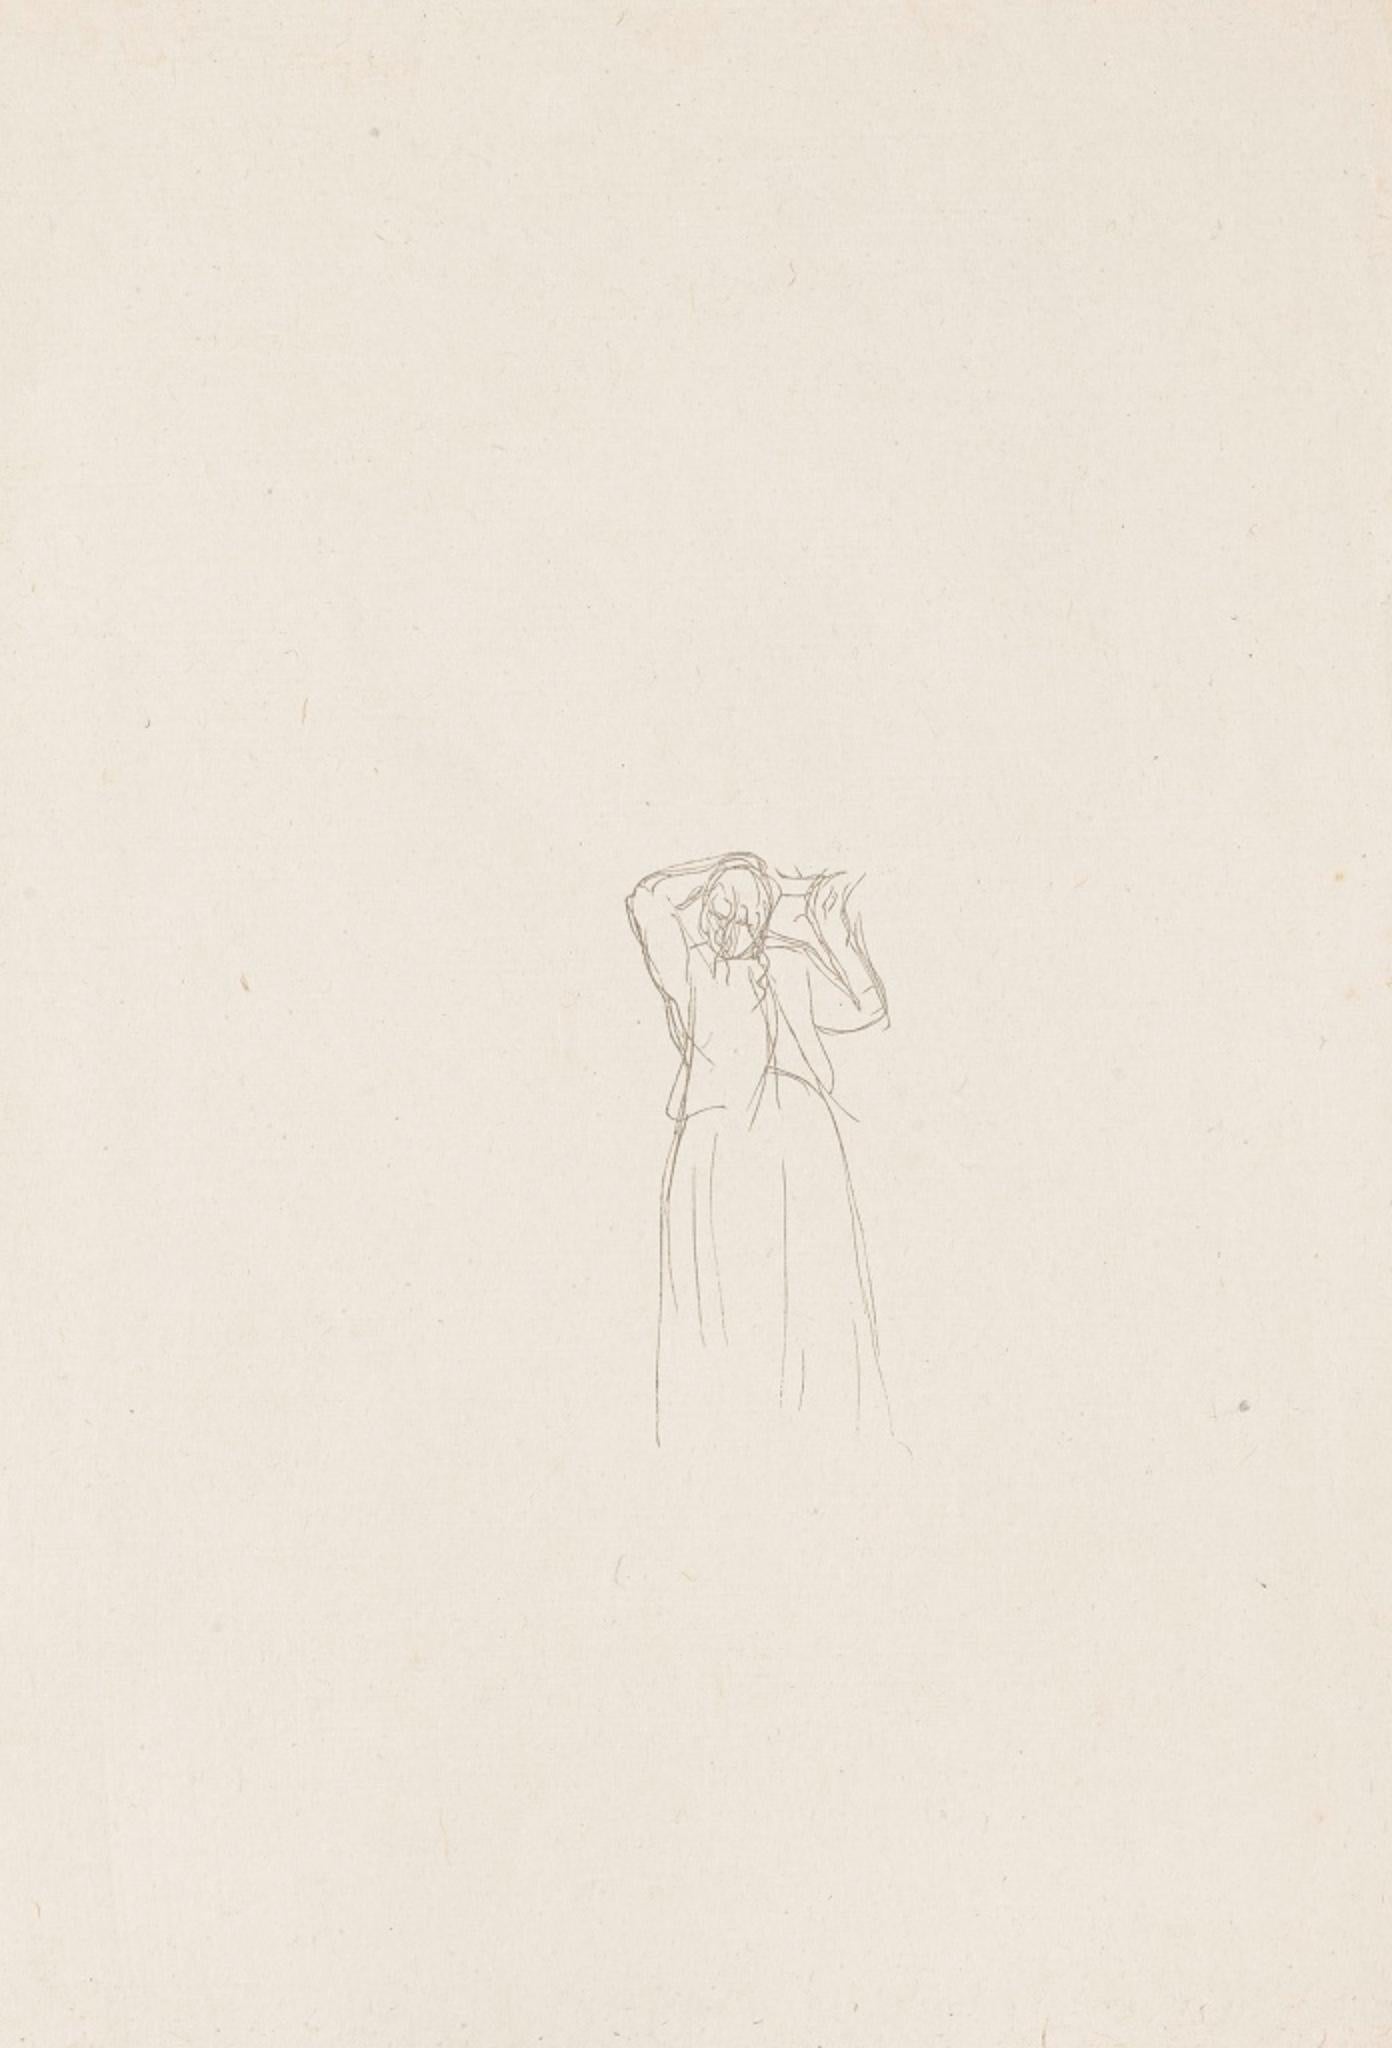 Unknown Figurative Art - Woman Silhouette - Original Pencil Drawing - 1900s